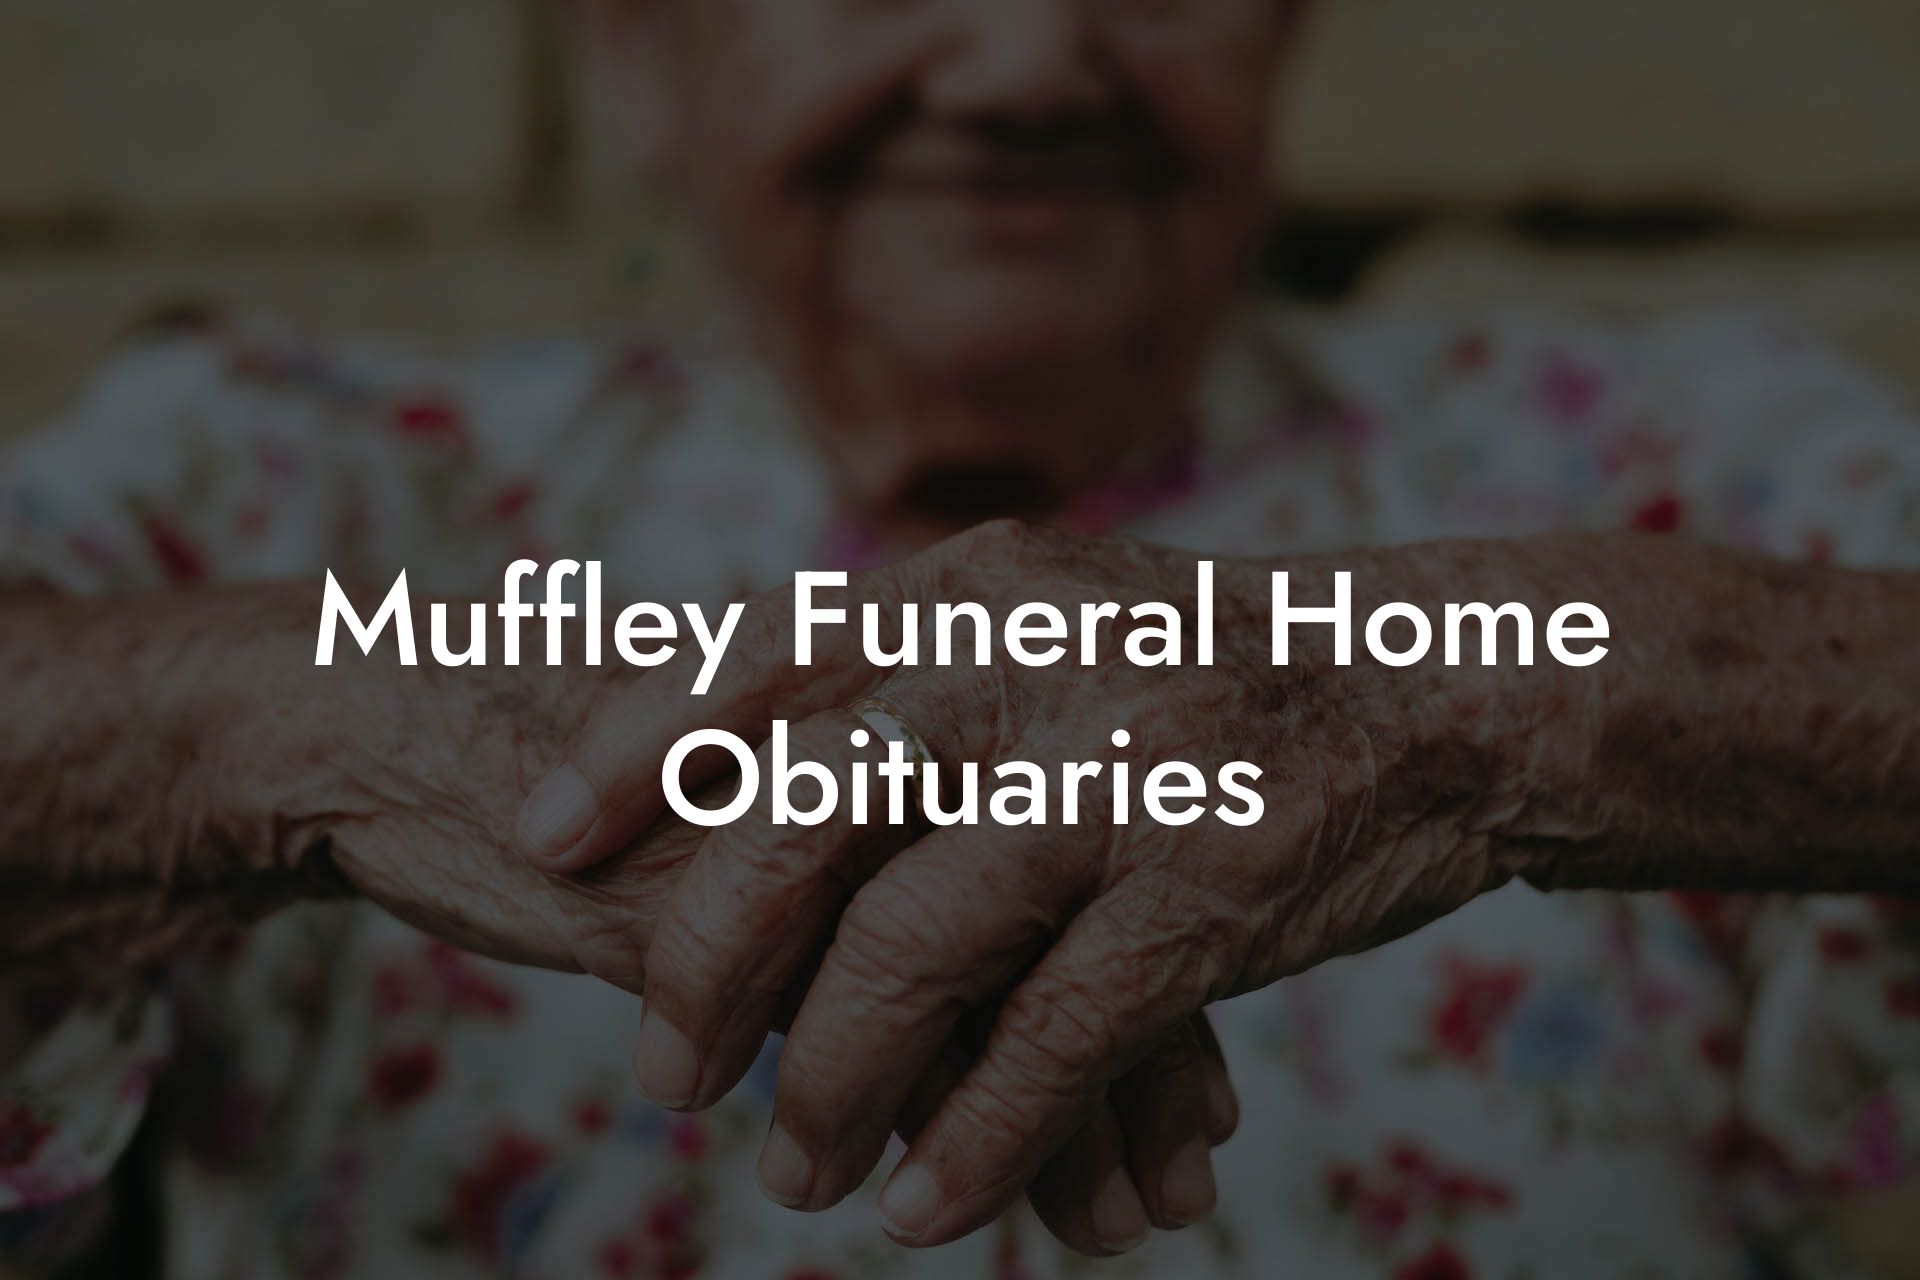 Muffley Funeral Home Obituaries